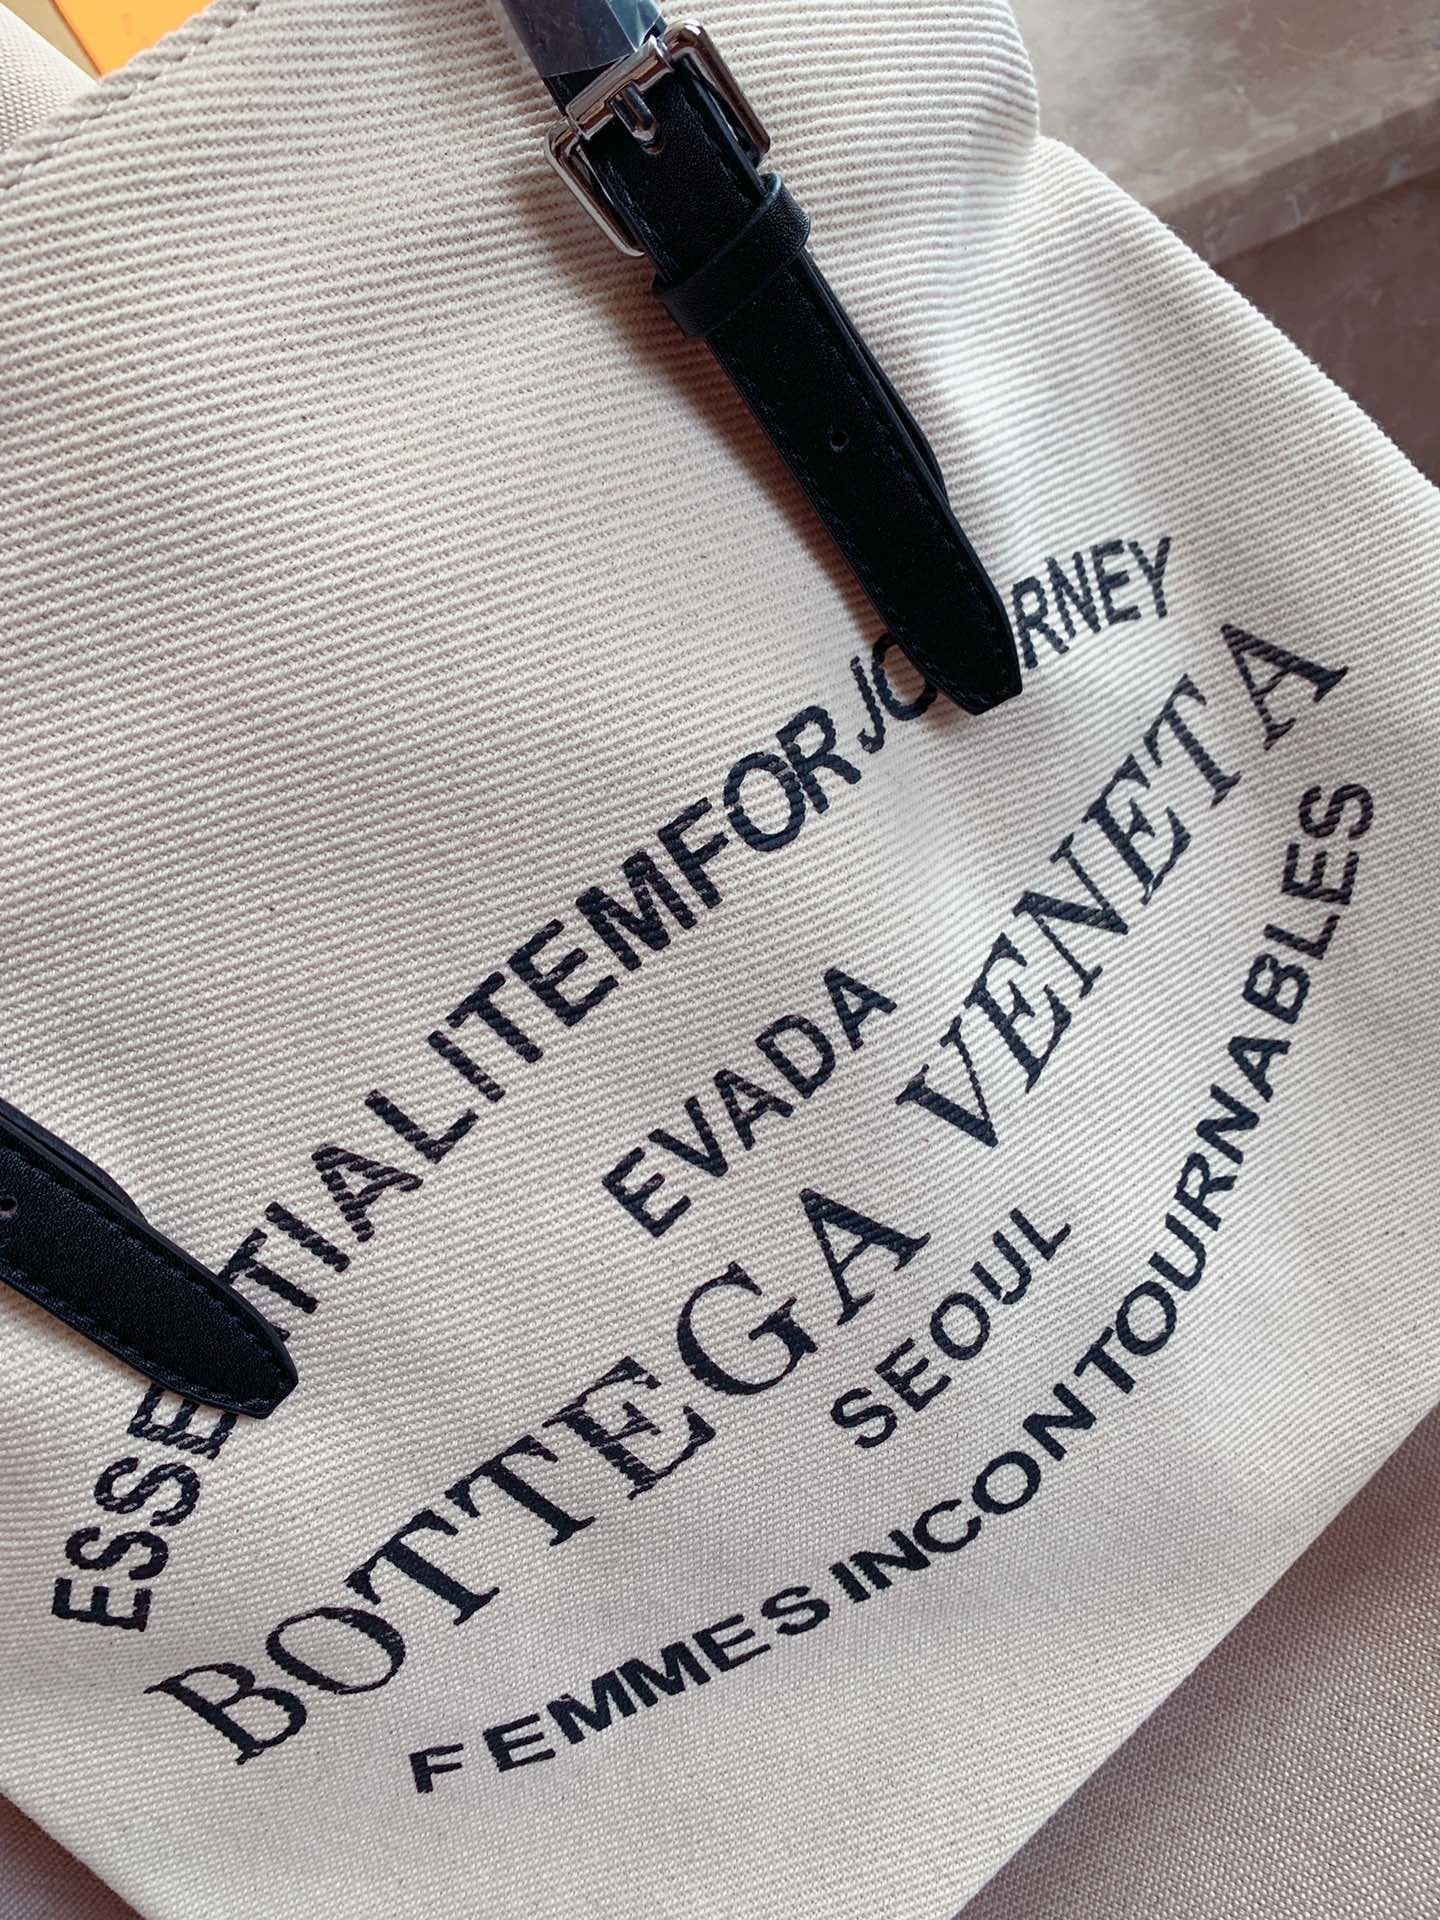 BVLGARI New Women Shopping Bag Canvas Handbag Tote Shoulder Bag 